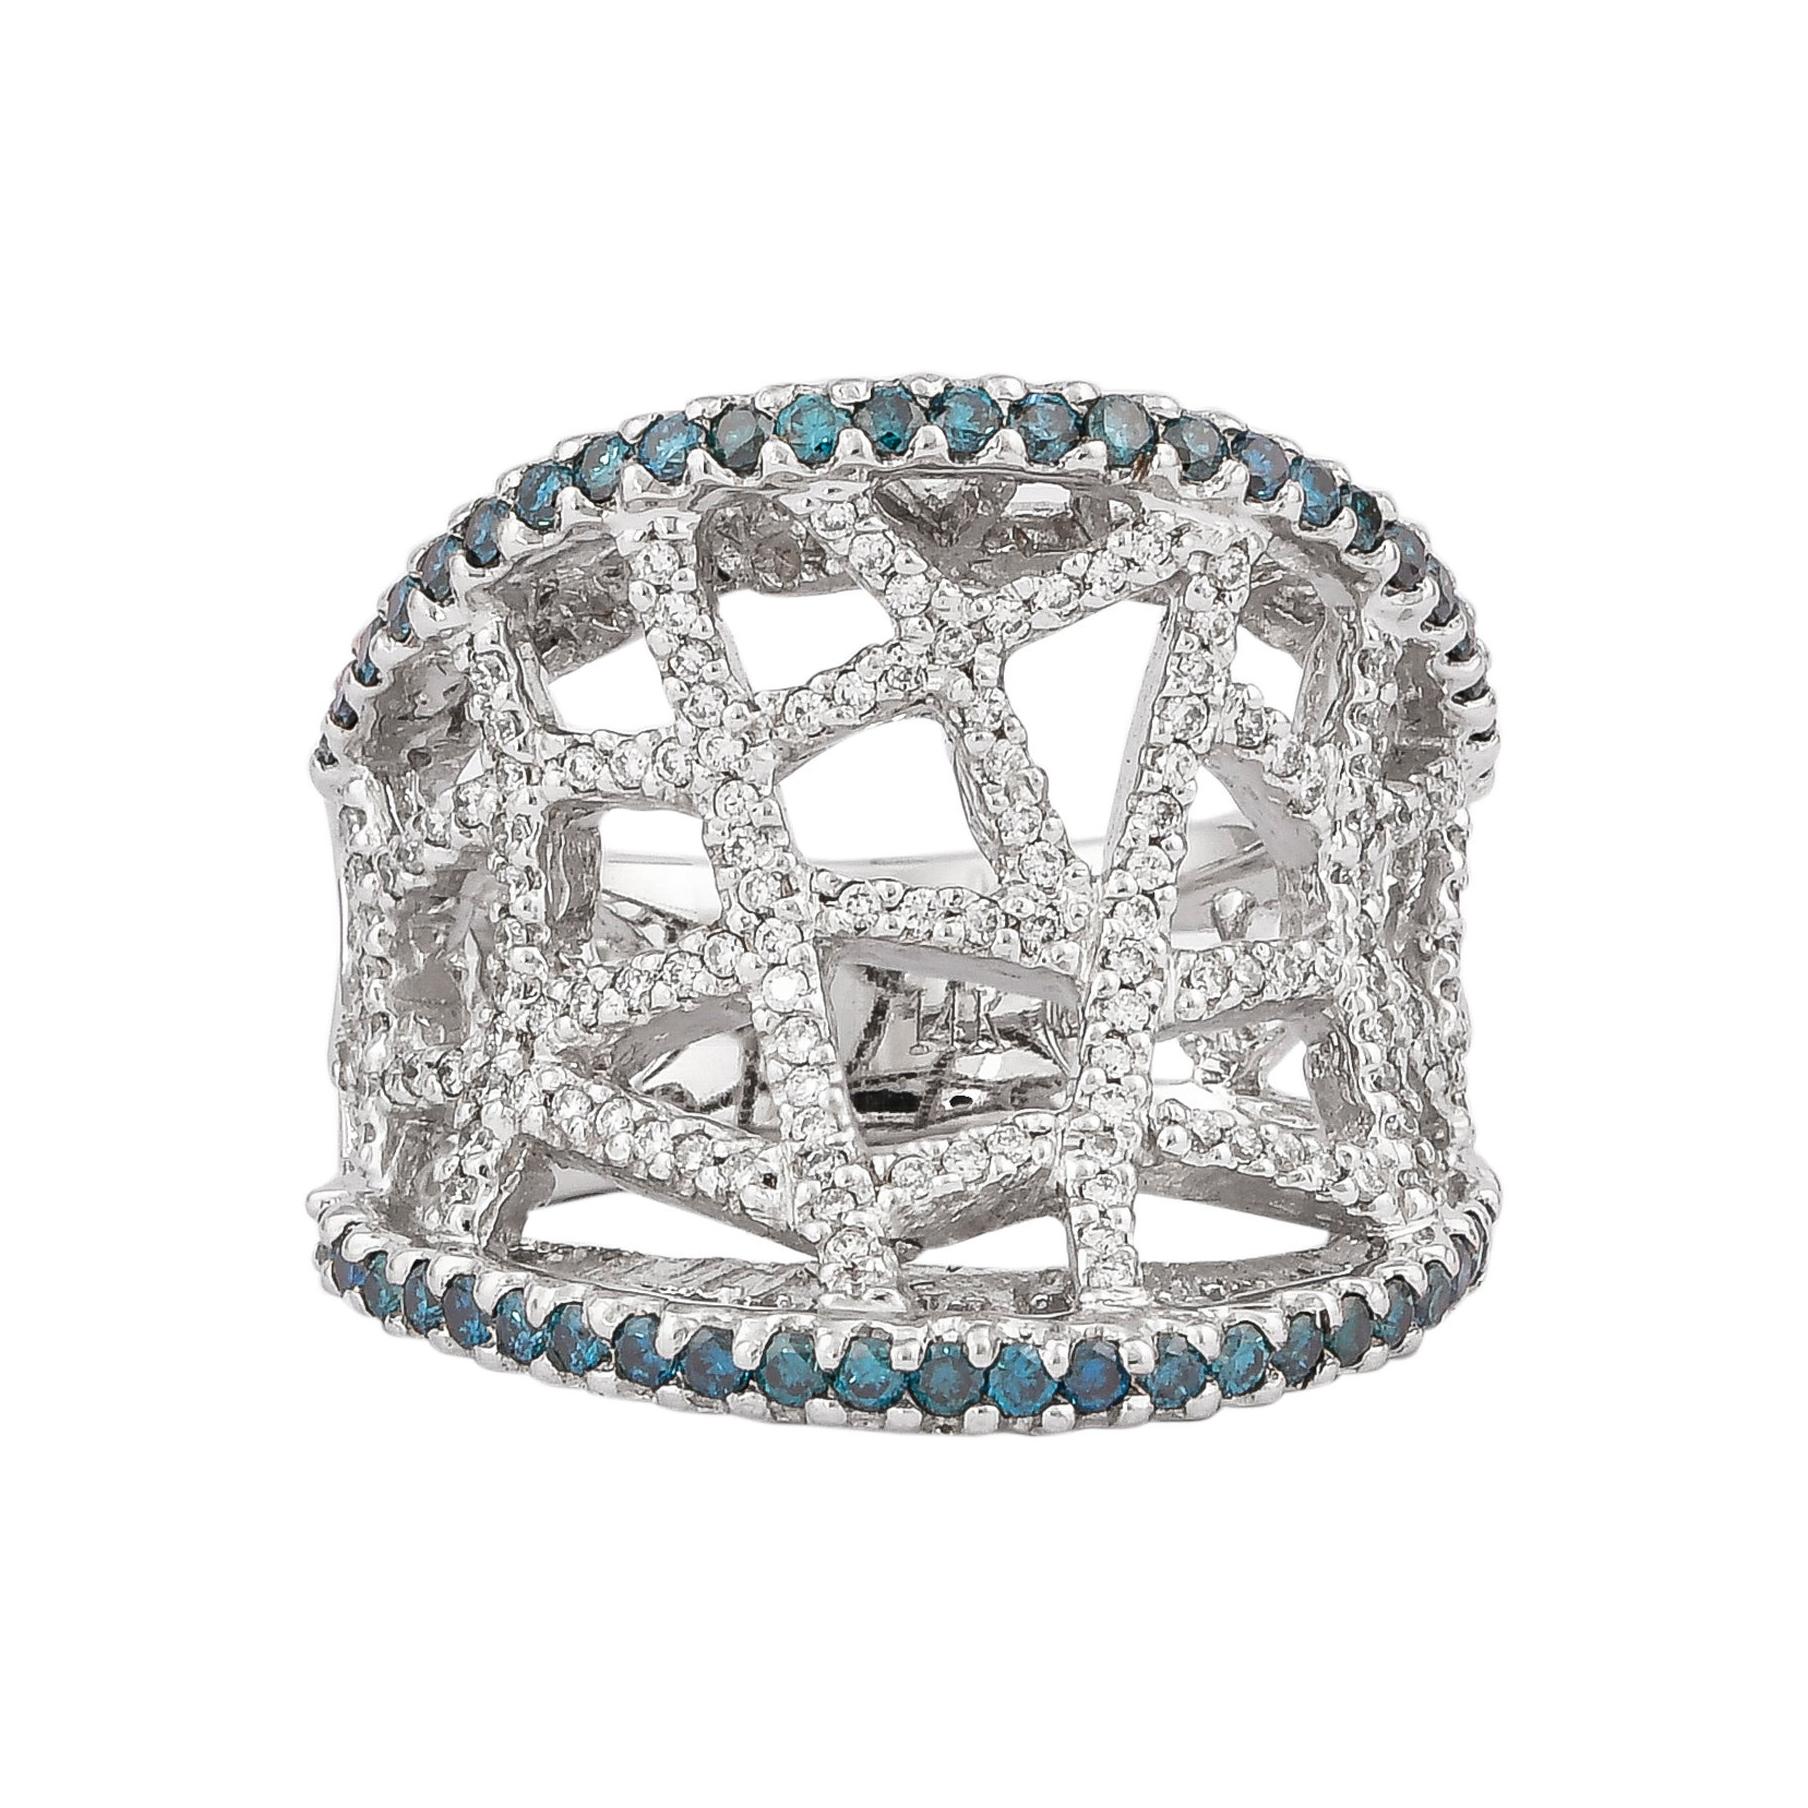 1.8 Carat Blue & White Diamond Ring in 14 Karat White Gold For Sale